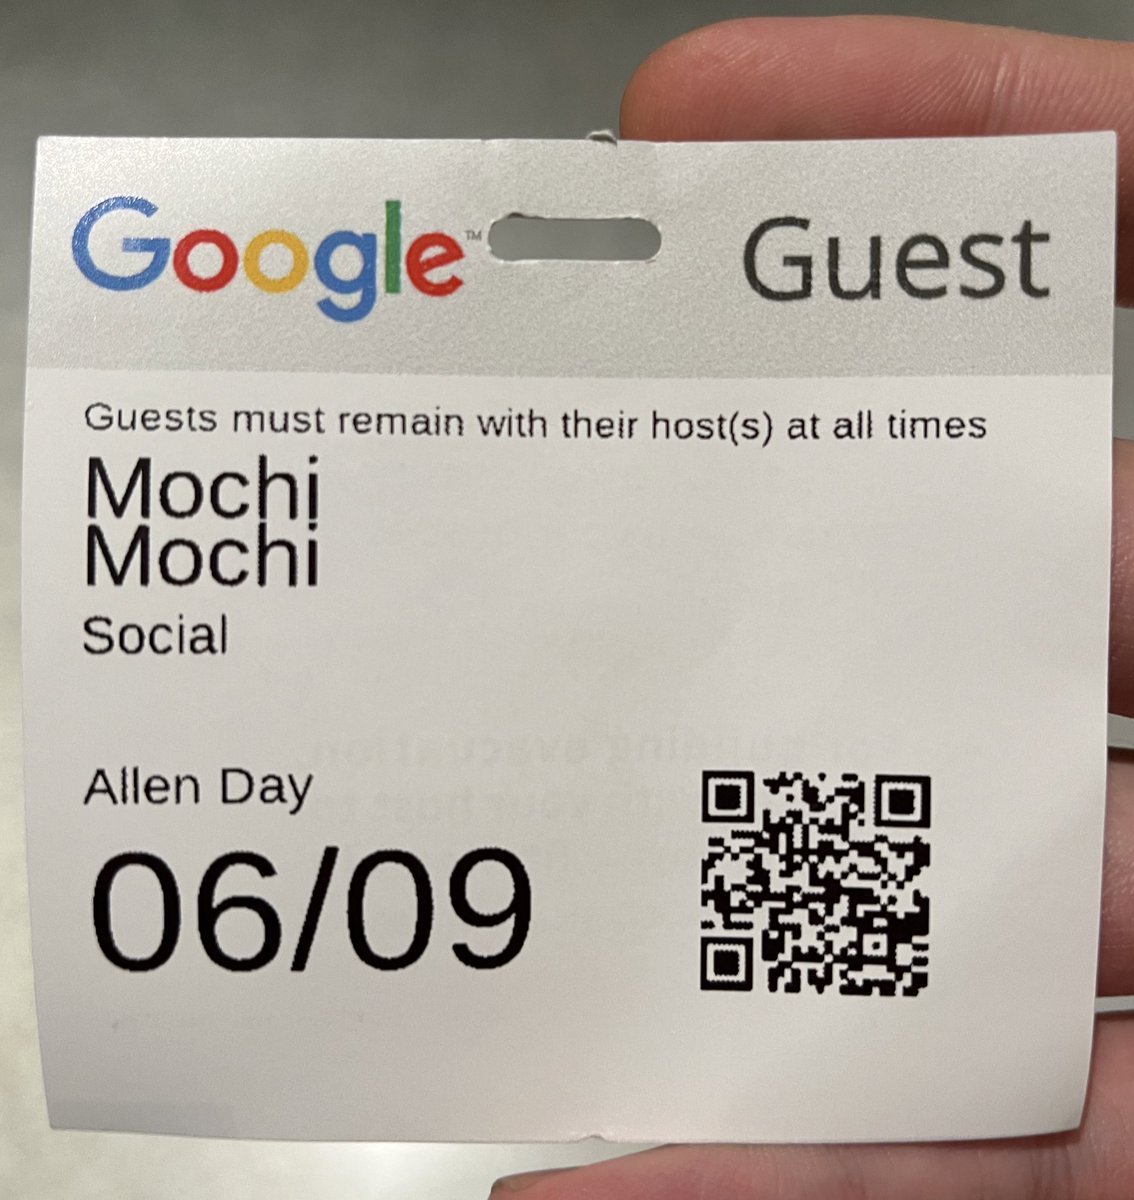 Welcome to @Google, @defi_mochi!